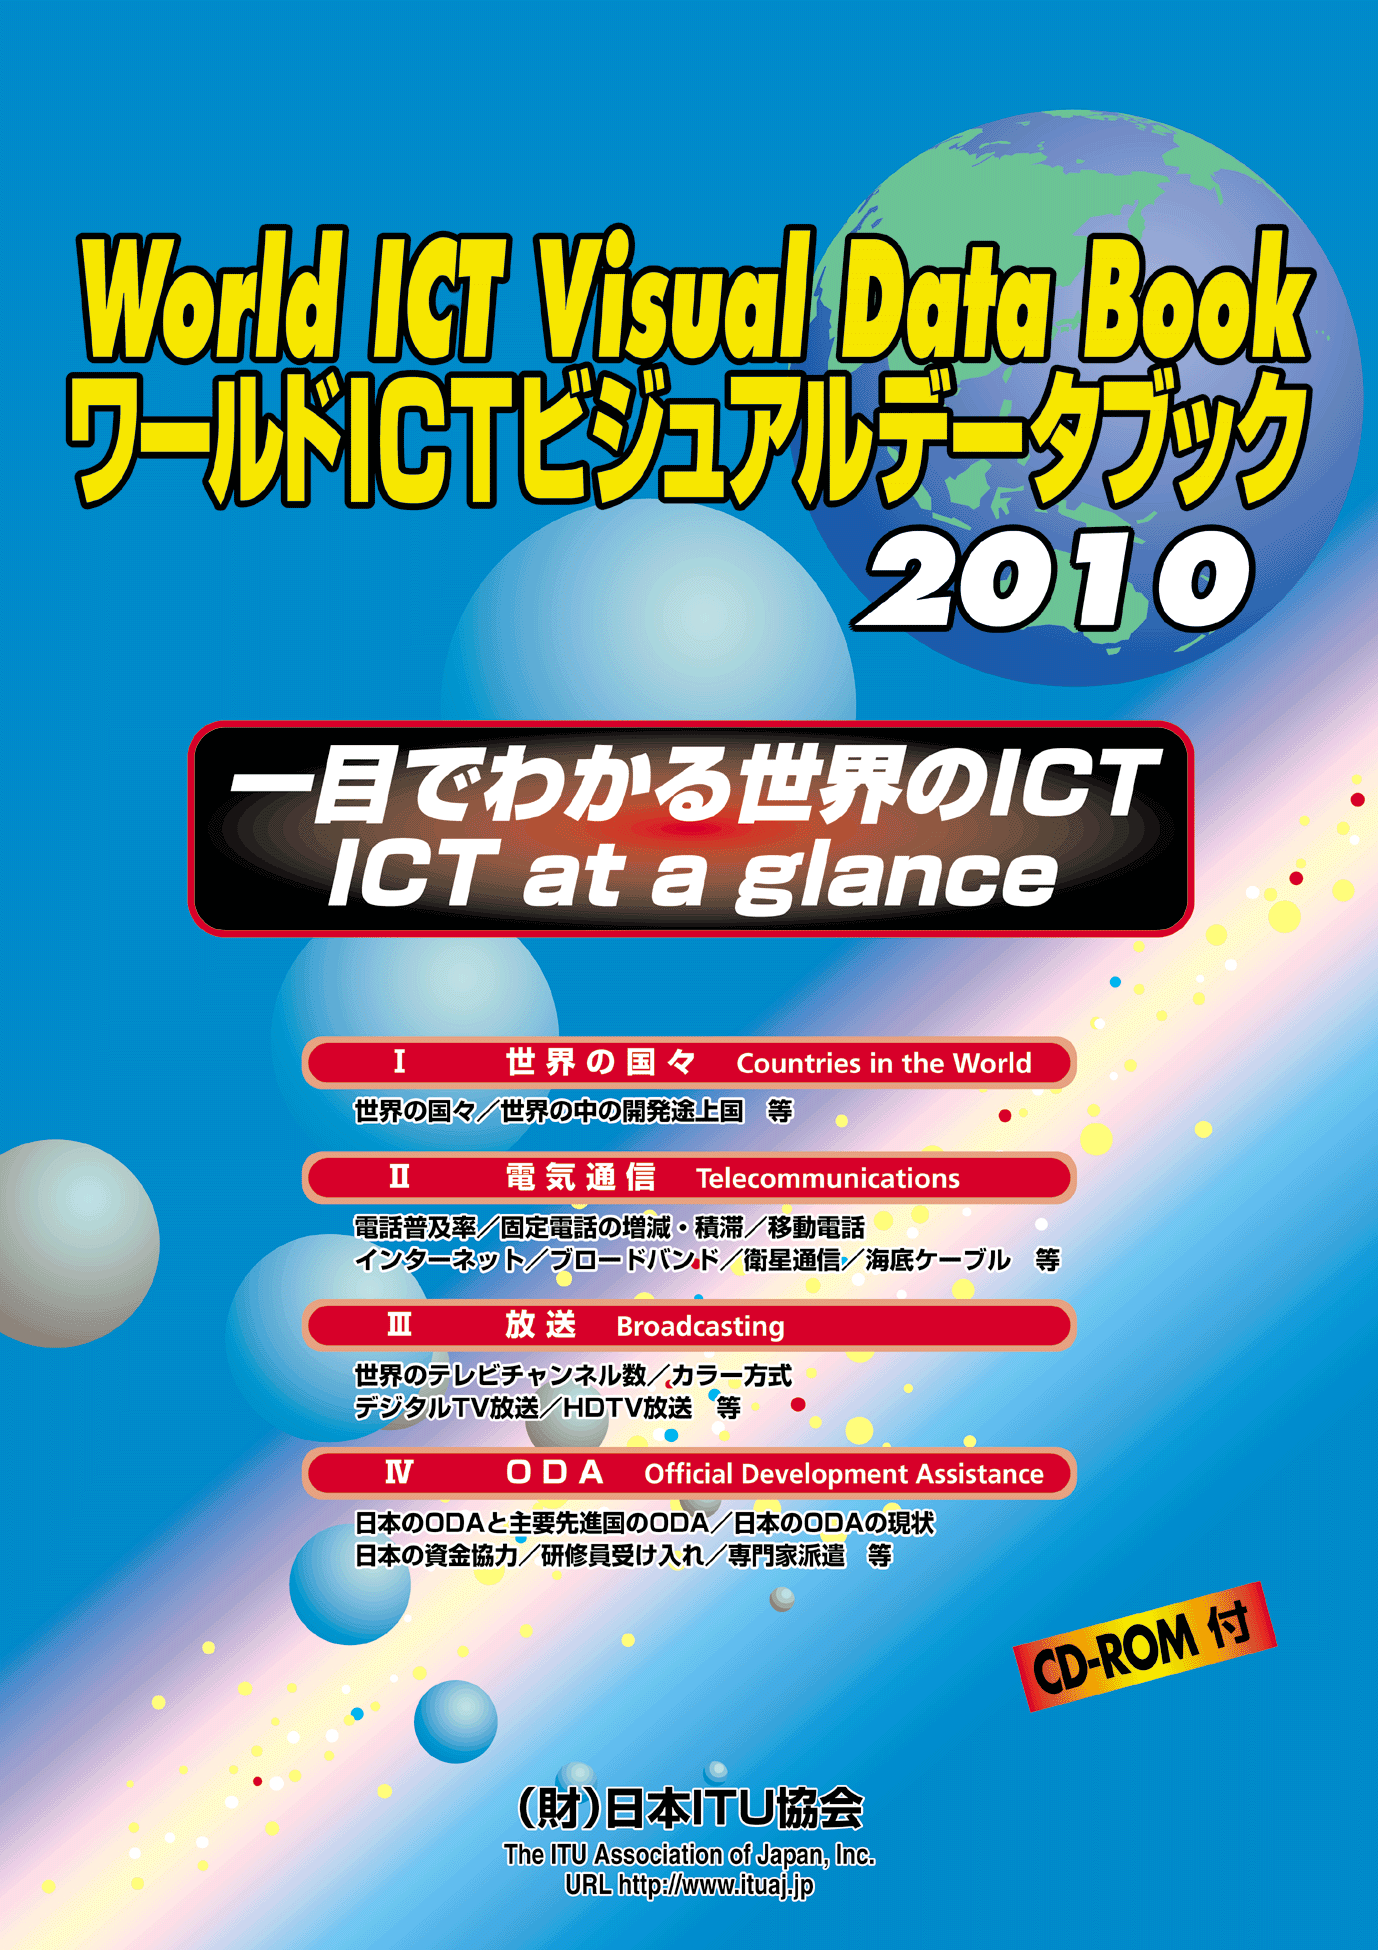 World ICT Visual Data Book